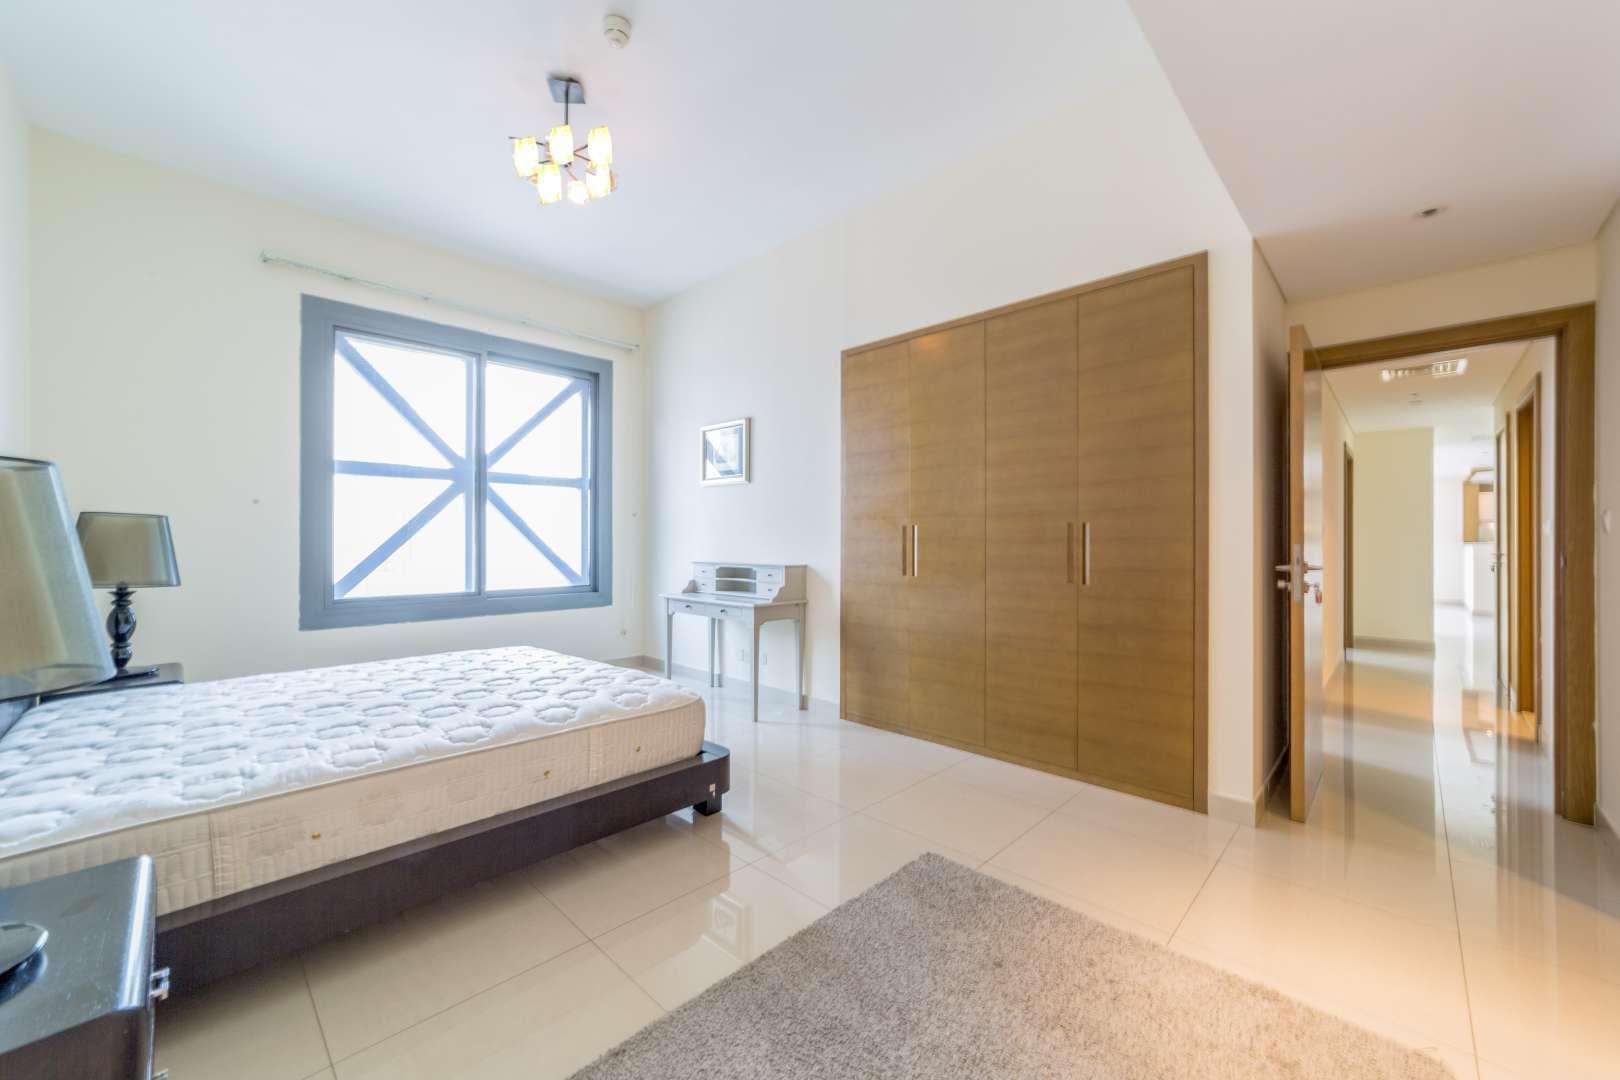 1 Bedroom Apartment For Rent Claren Tower Lp05109 163d9e1960151500.jpg